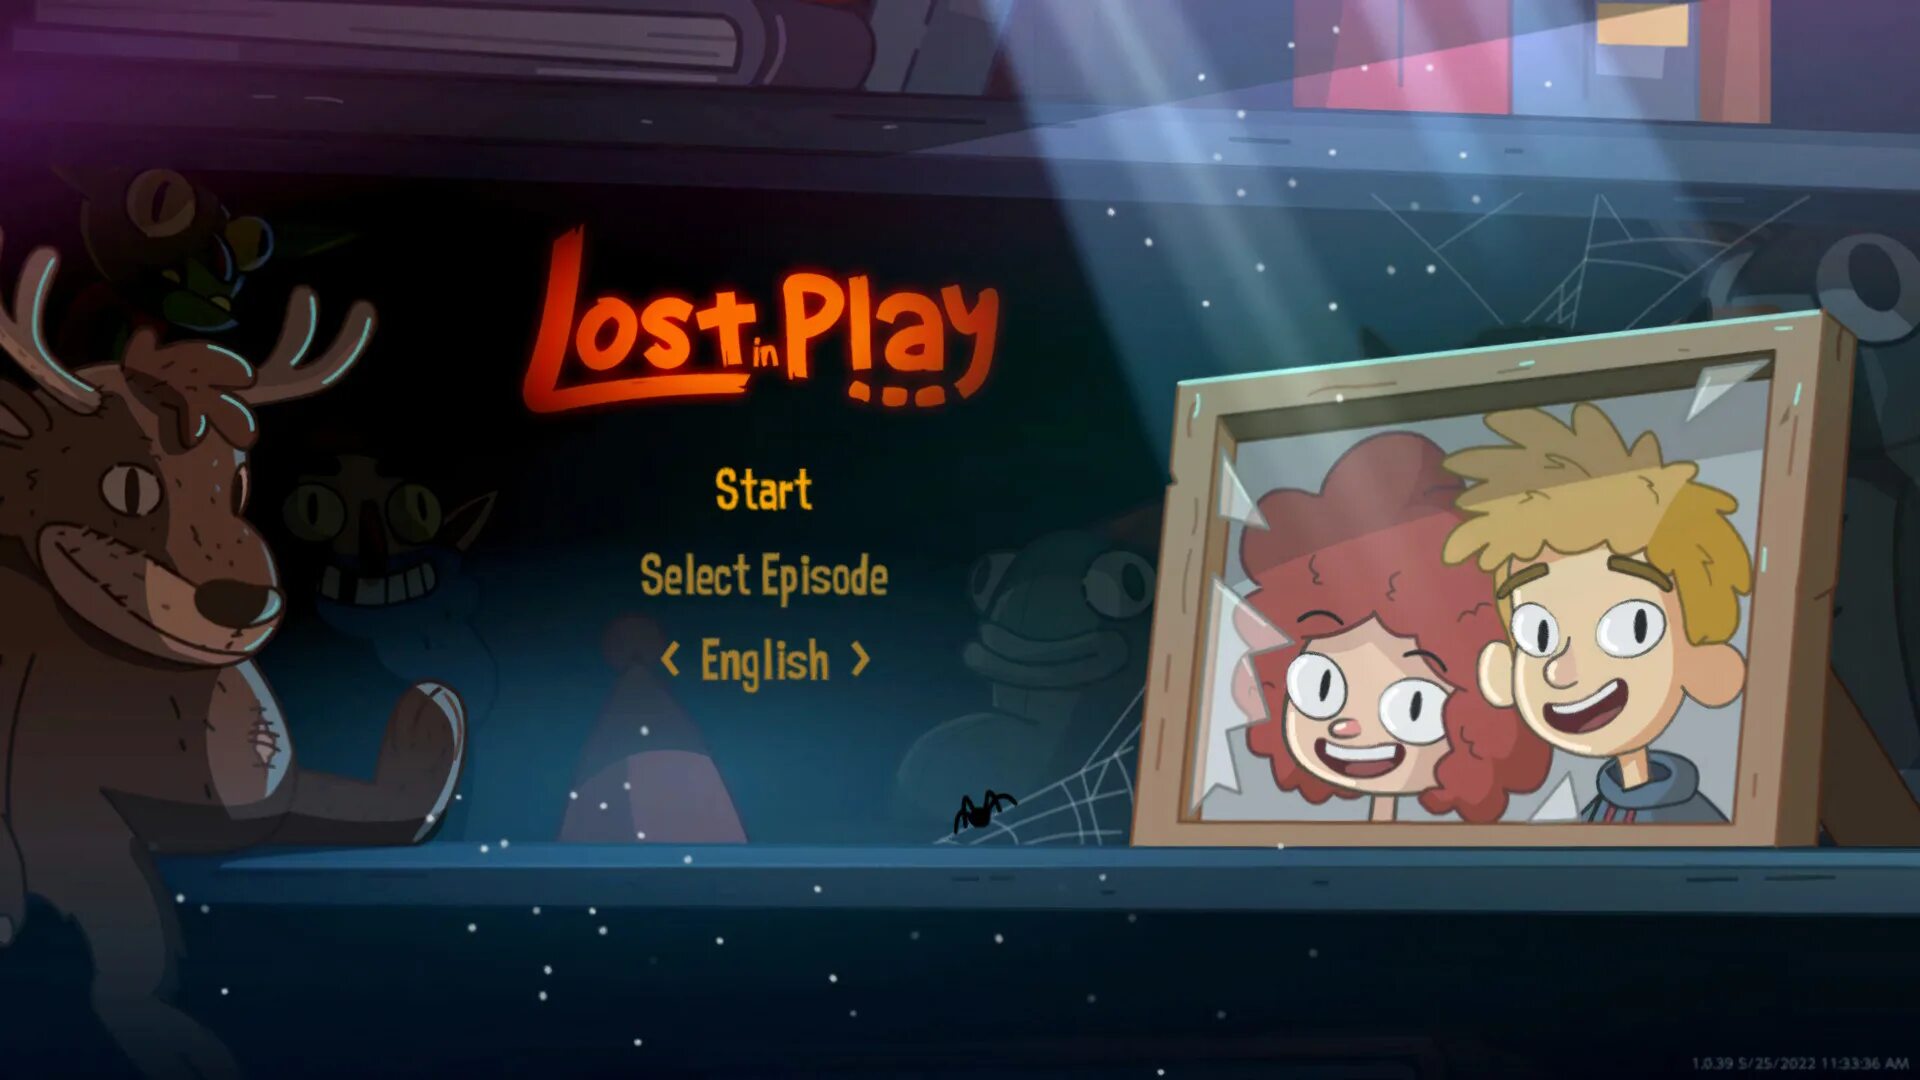 Lost in Play. Lost in Play game. Lost in Play 2. Lost in Play эпизоды. I play game перевод